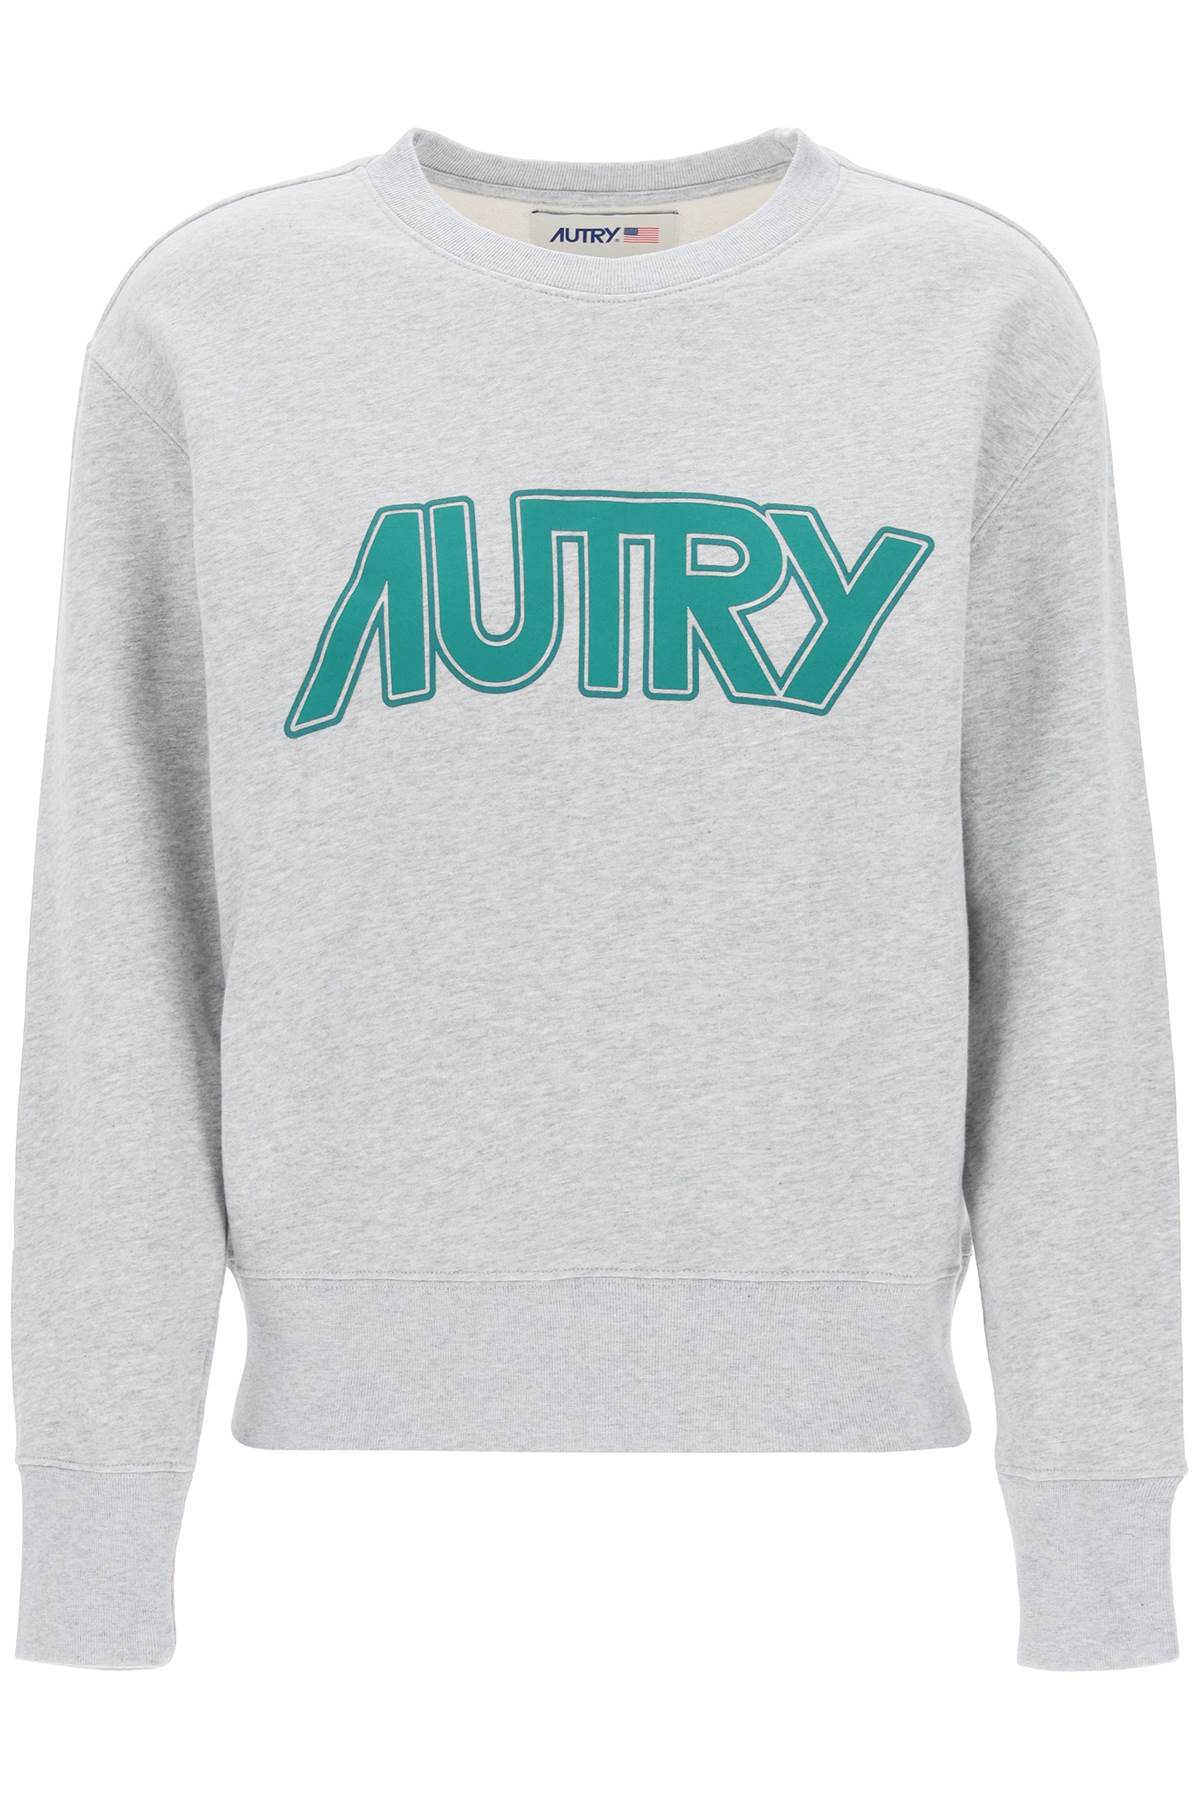 Autry sweatshirt with maxi logo print-0